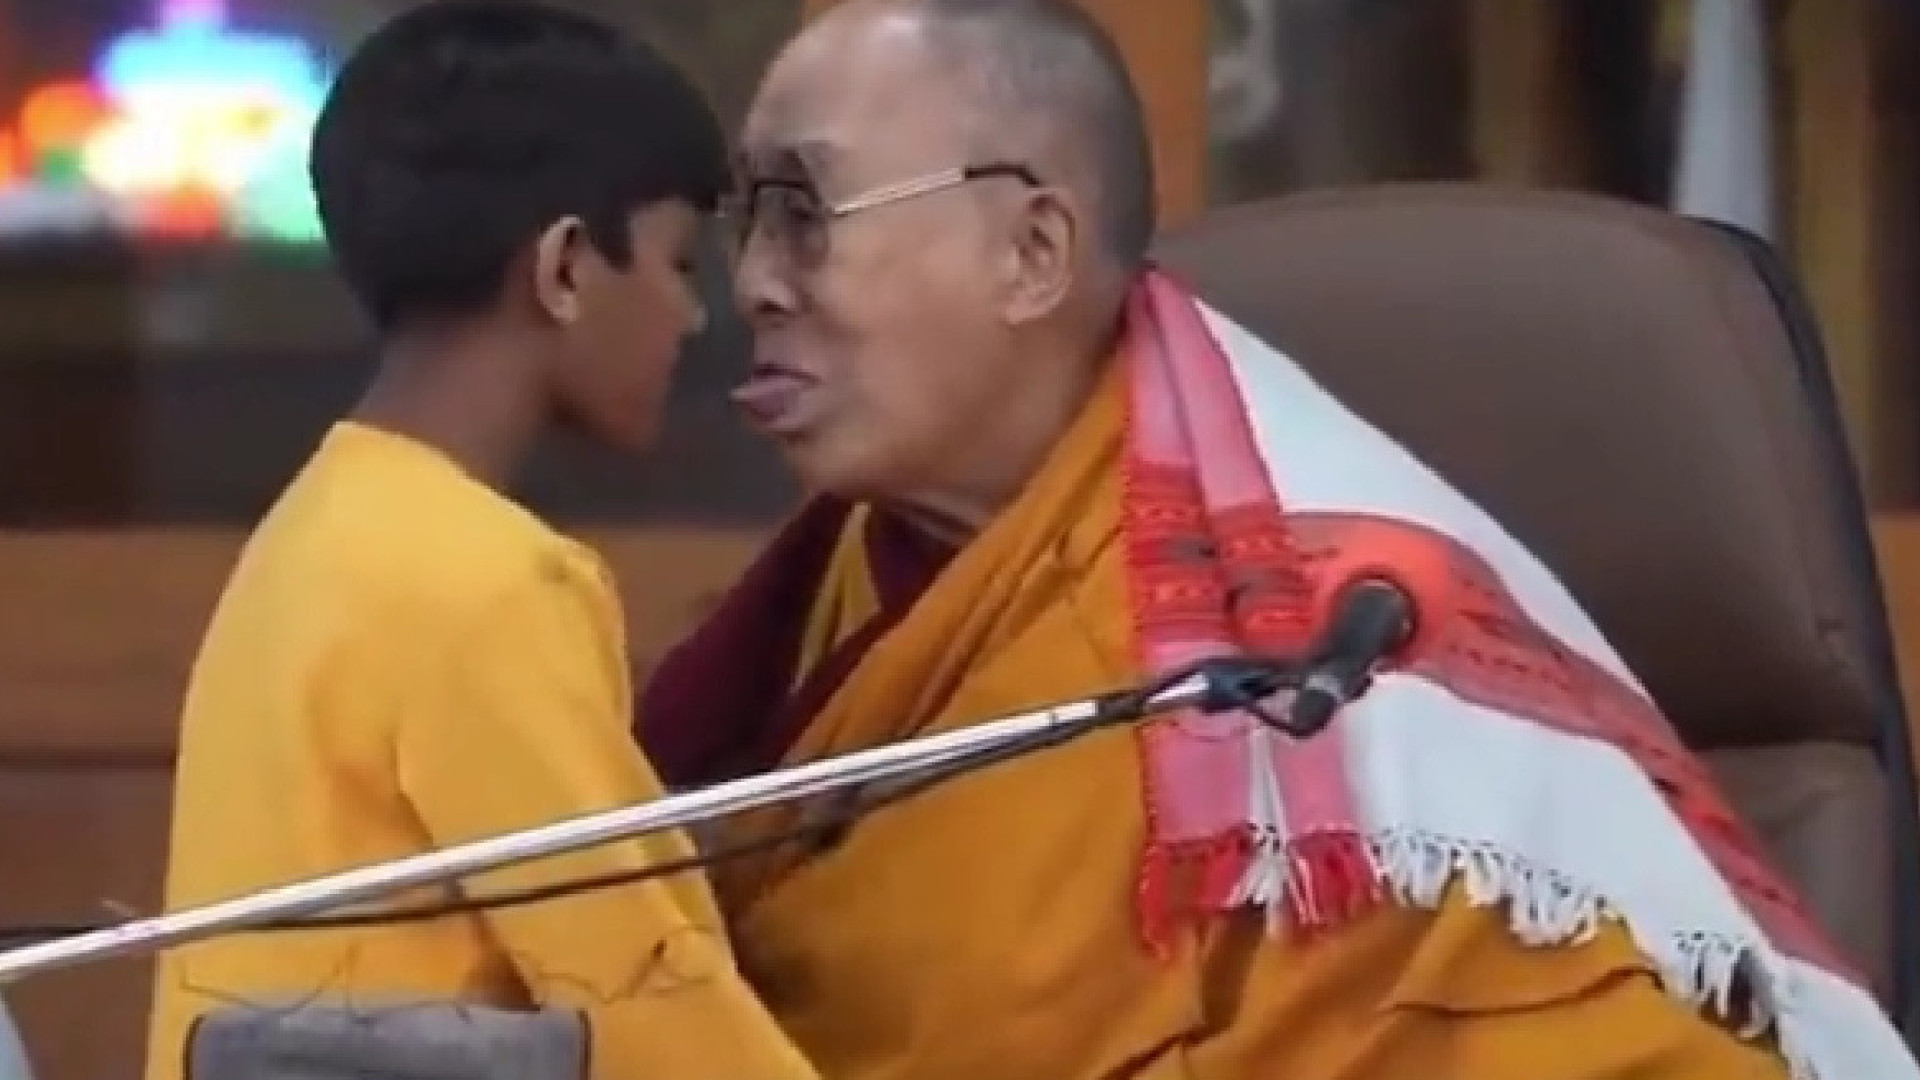 Dalai Lama pede desculpa após pedir a menino para lhe "chupar a língua"